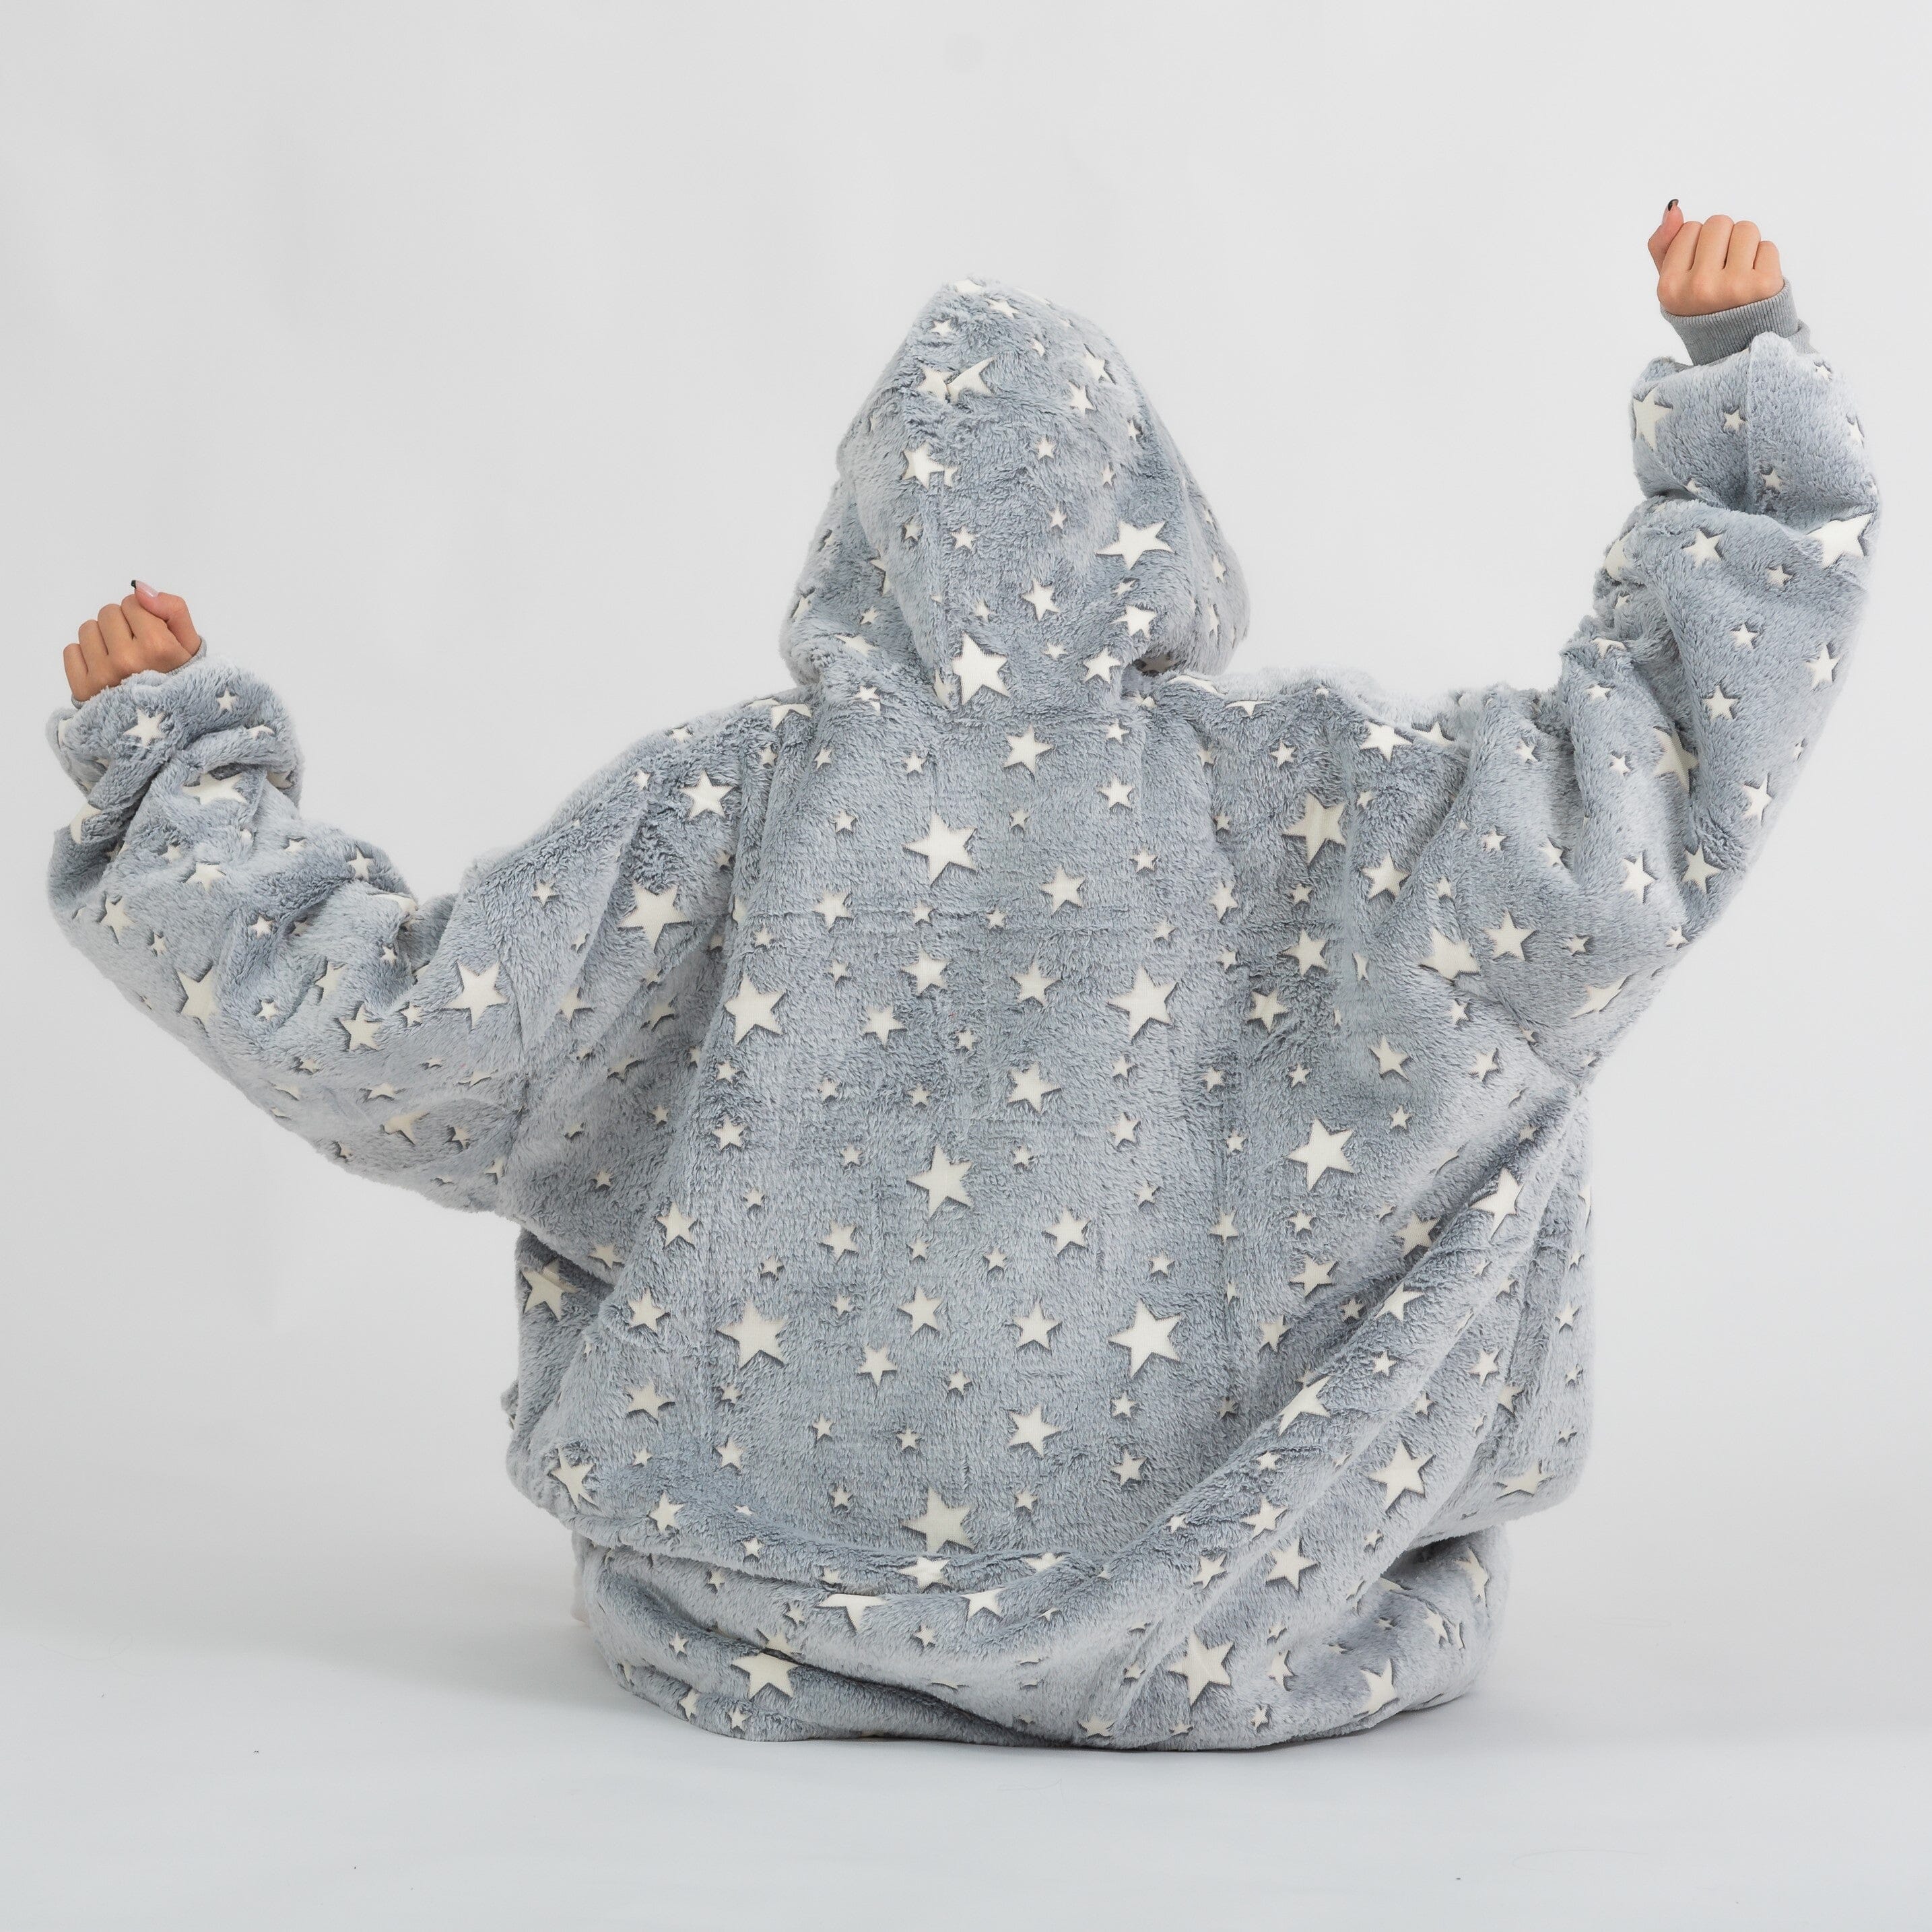 Pijama Cobertor Grey Star Fluorescente GatoGeek 